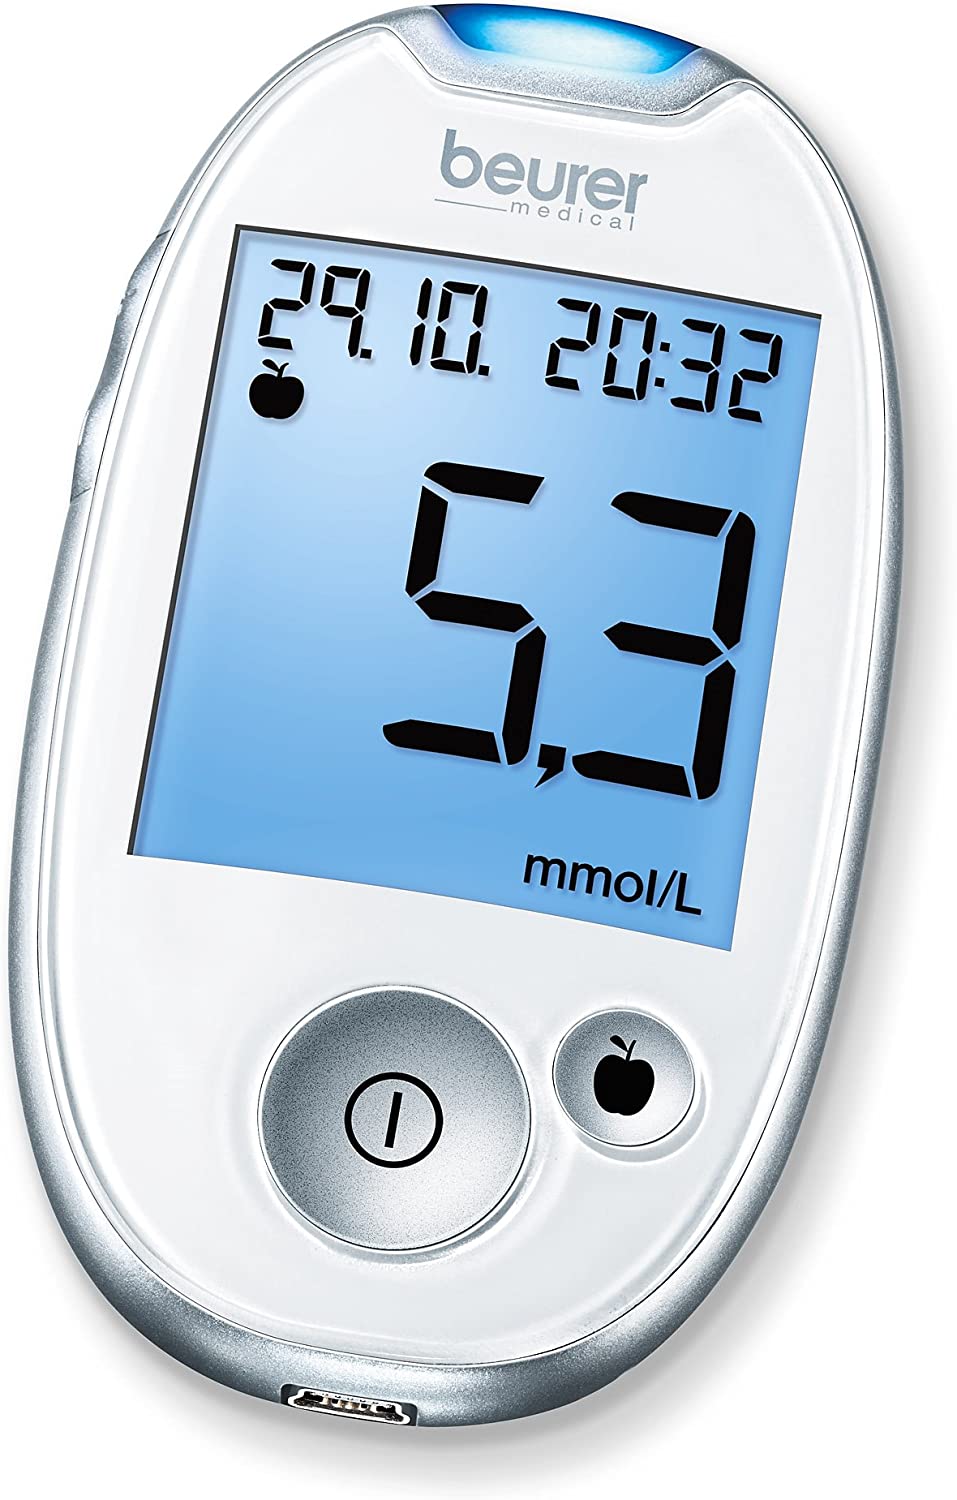 Beurer GL 44 mmol/l Blood Glucose Monitor White